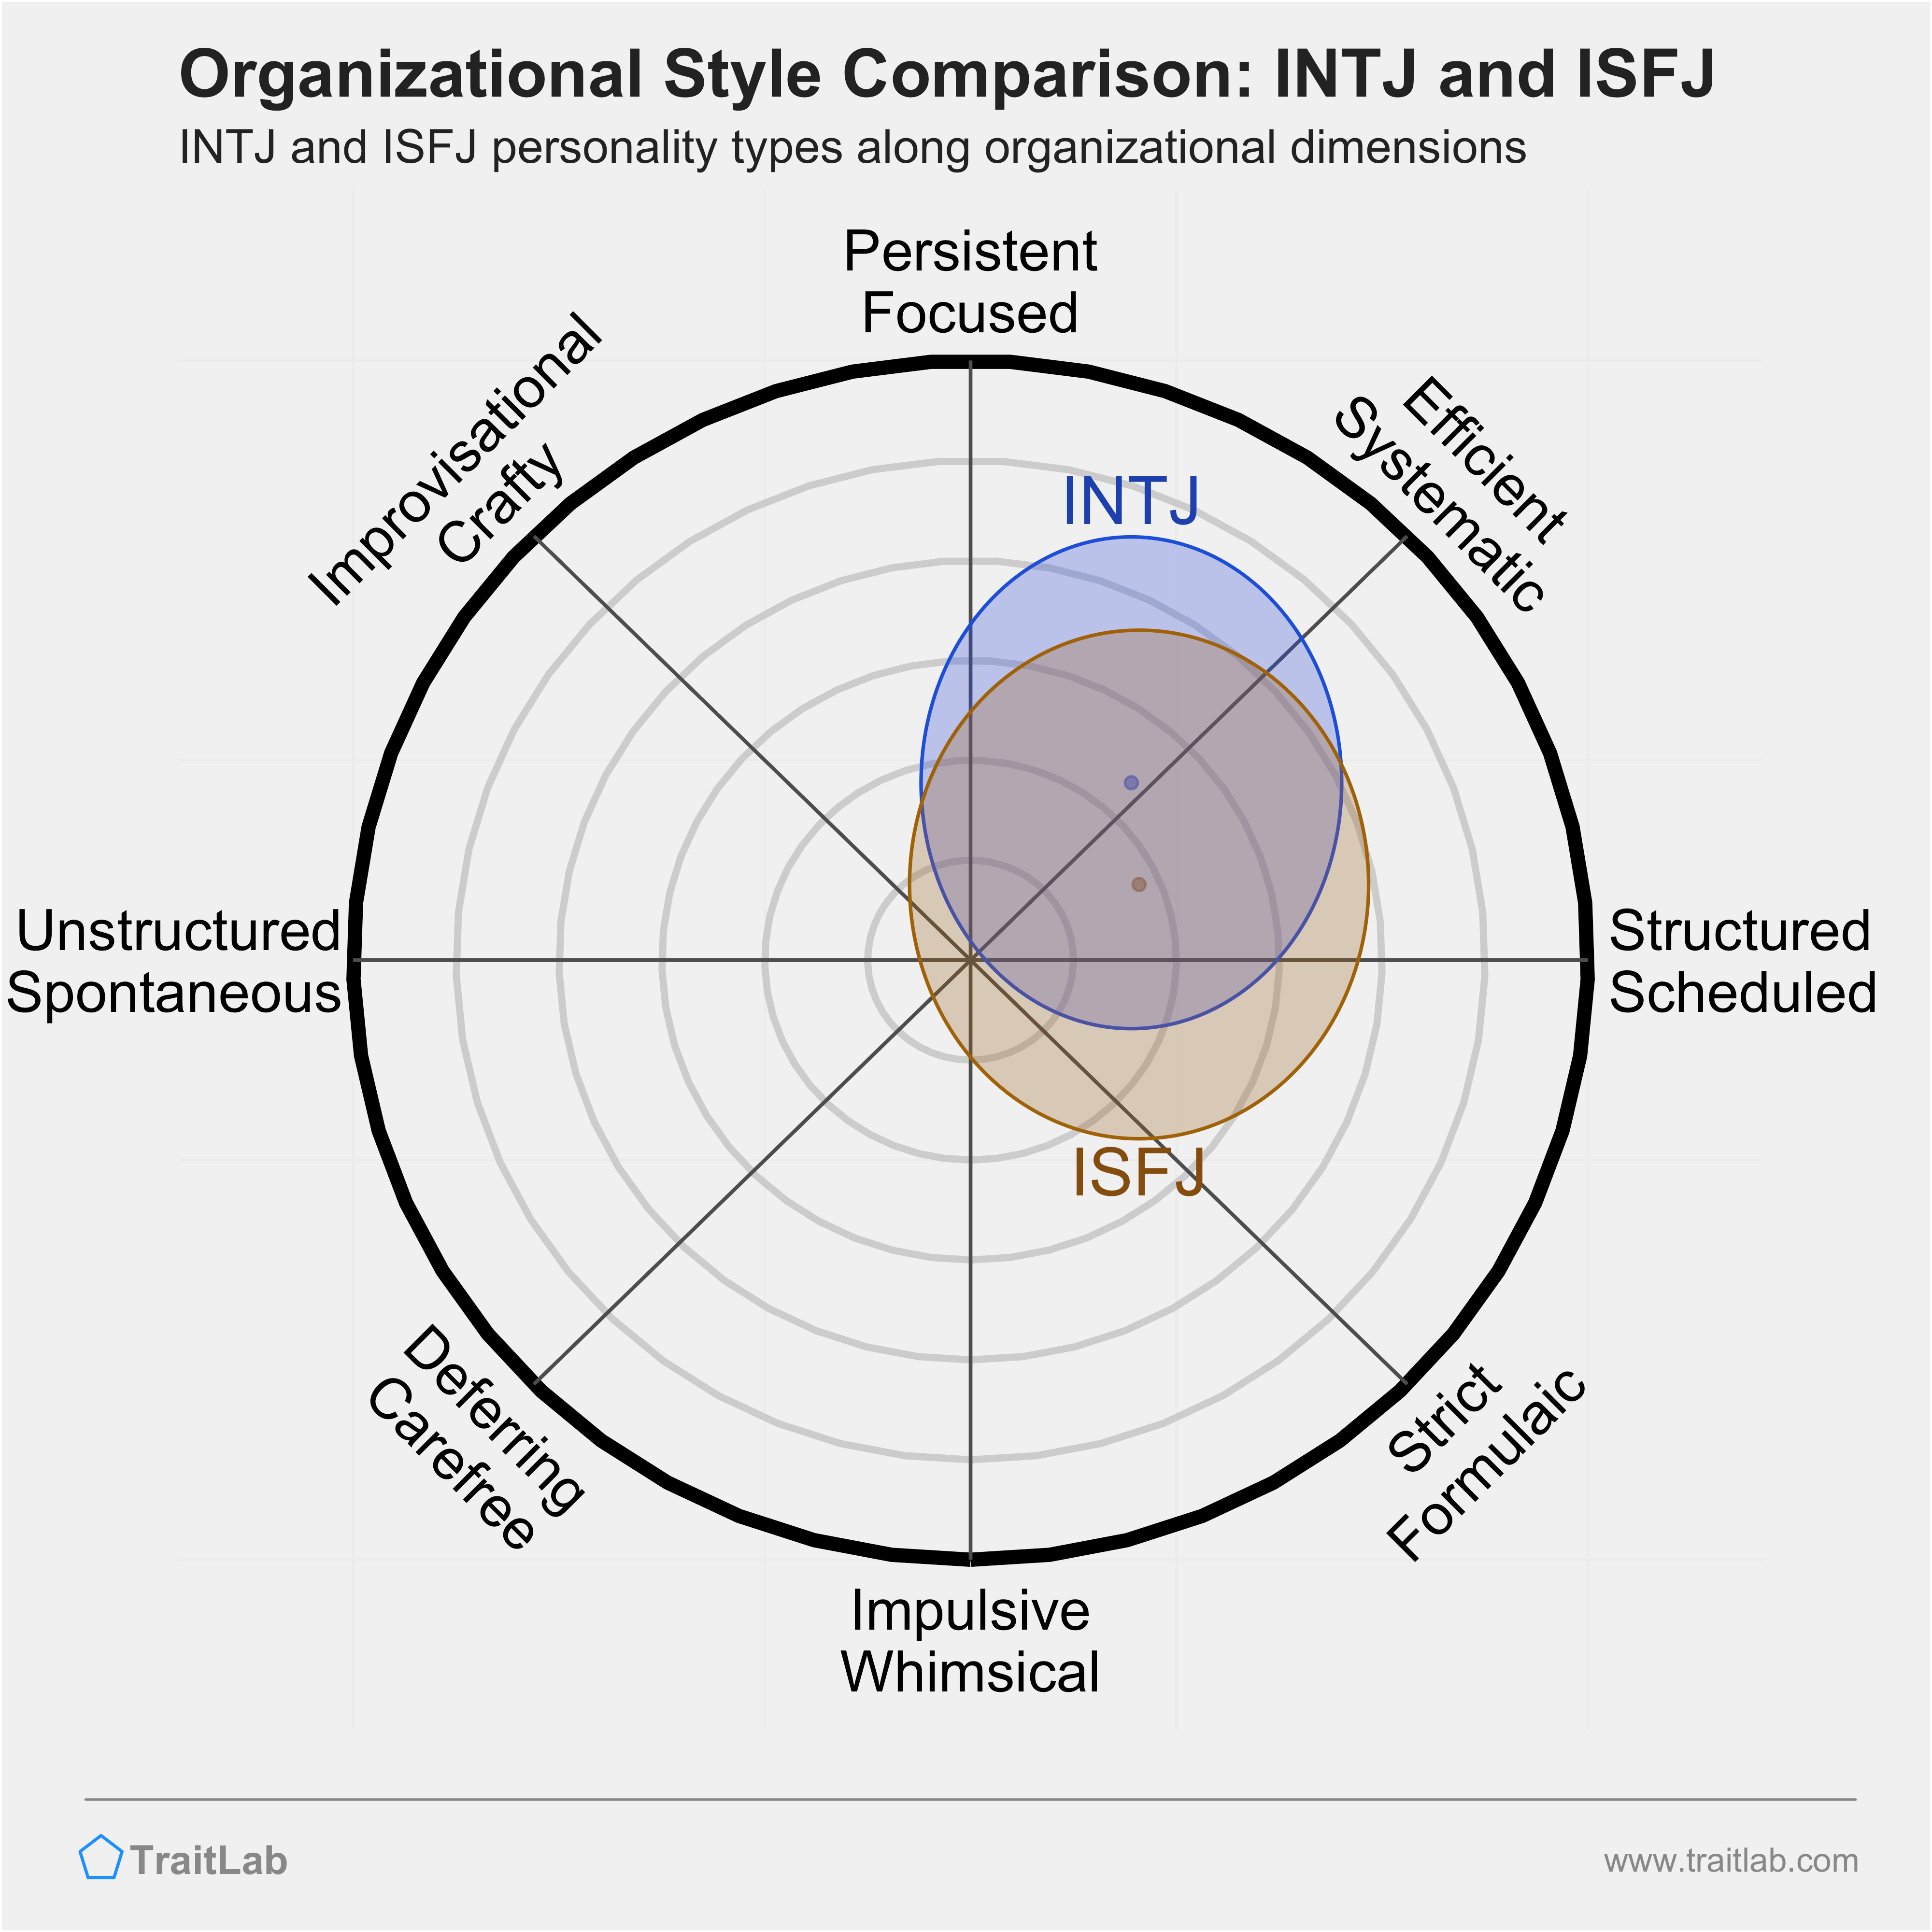 INTJ and ISFJ comparison across organizational dimensions